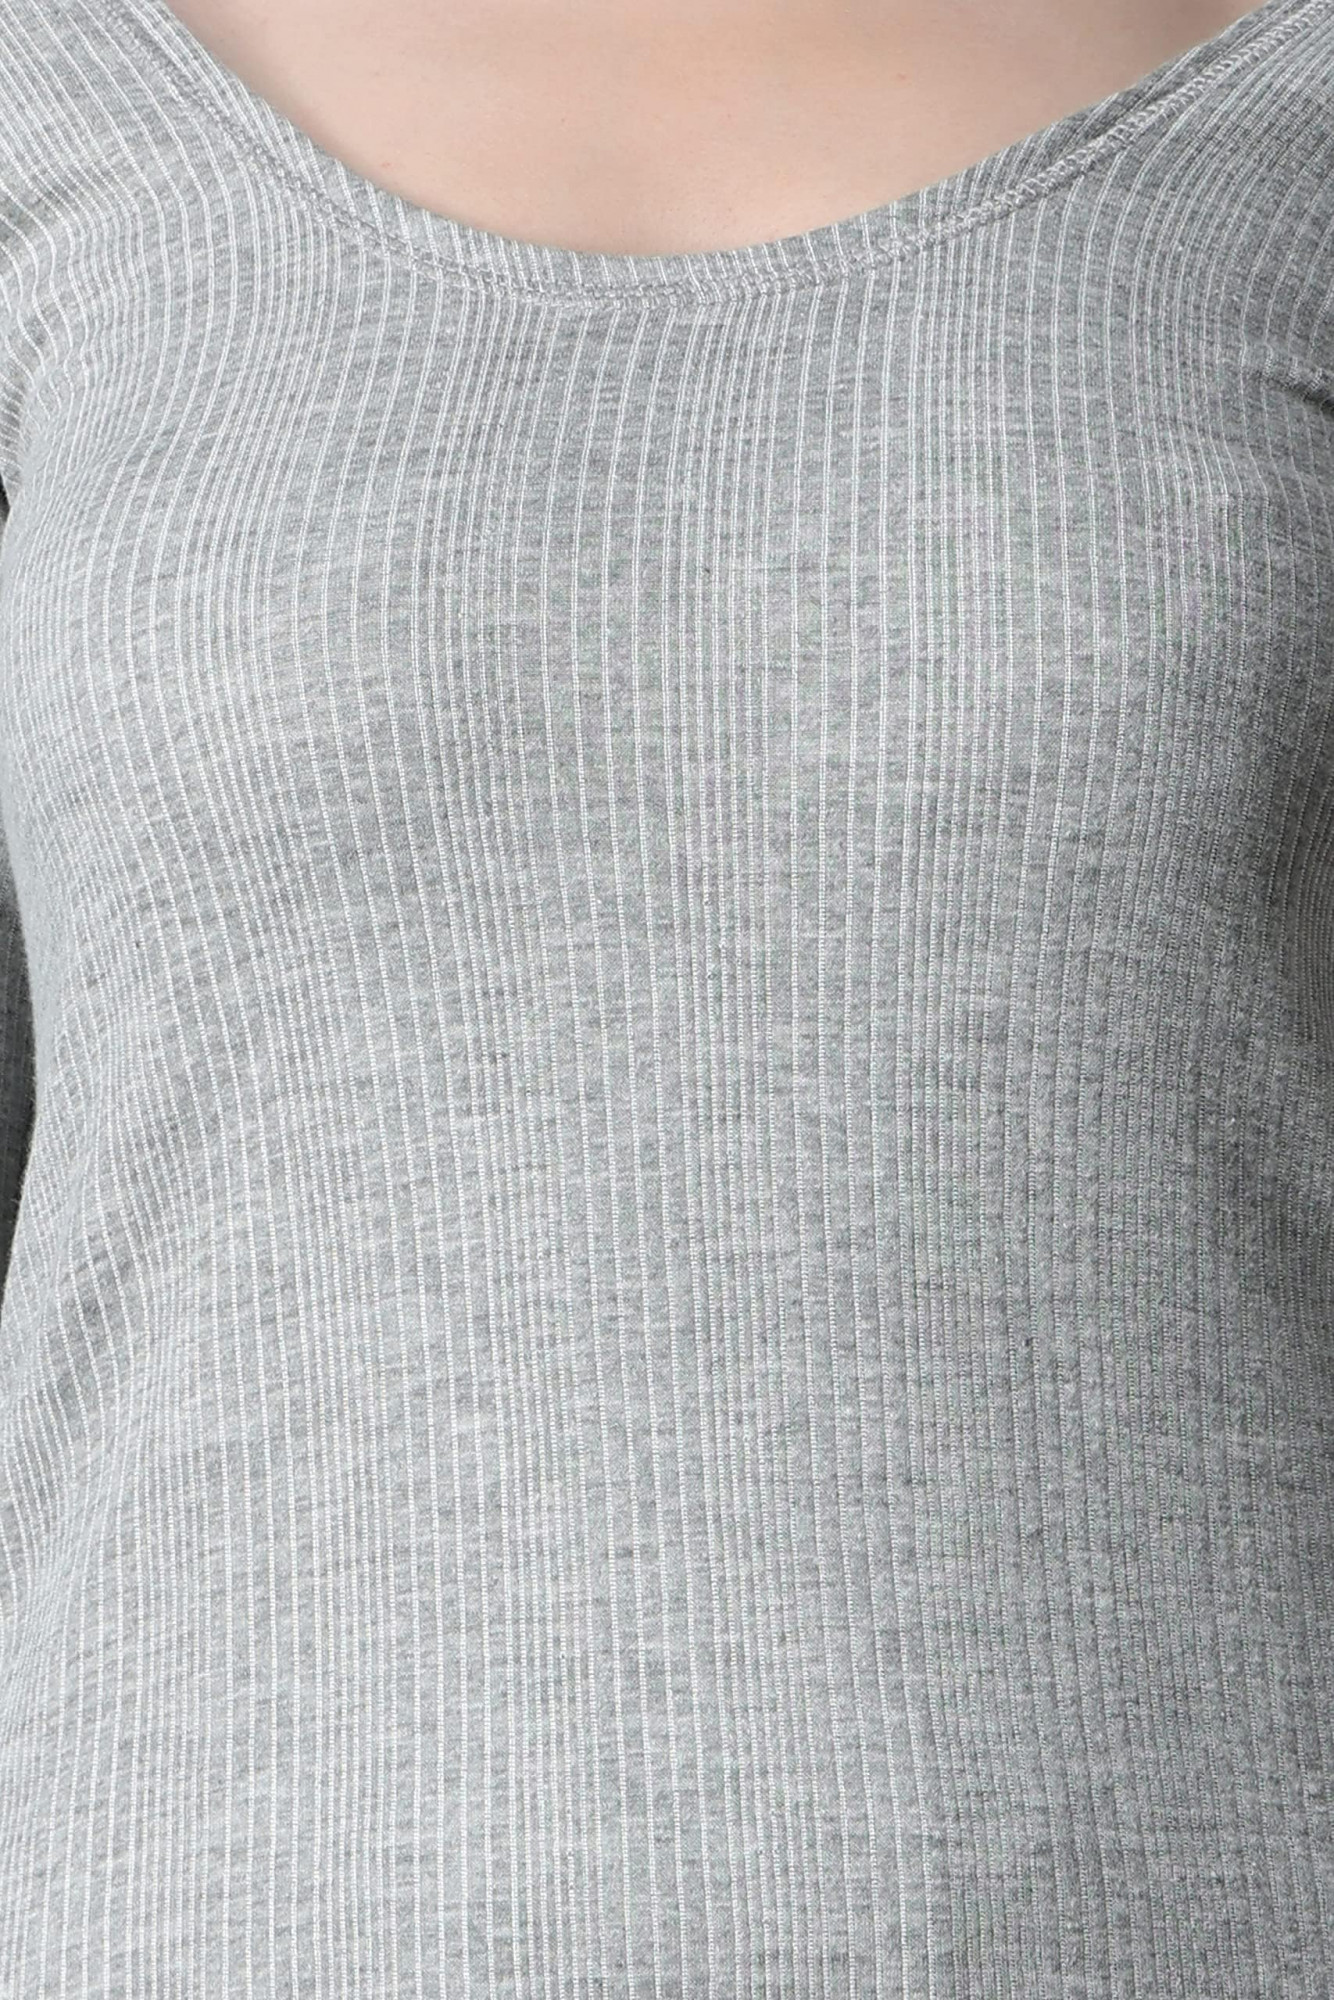 FF Winter Wear Thermal Upper Vest and Bottom Lower Warmer Combo for Women  Long Johns Underwear Set - White, M